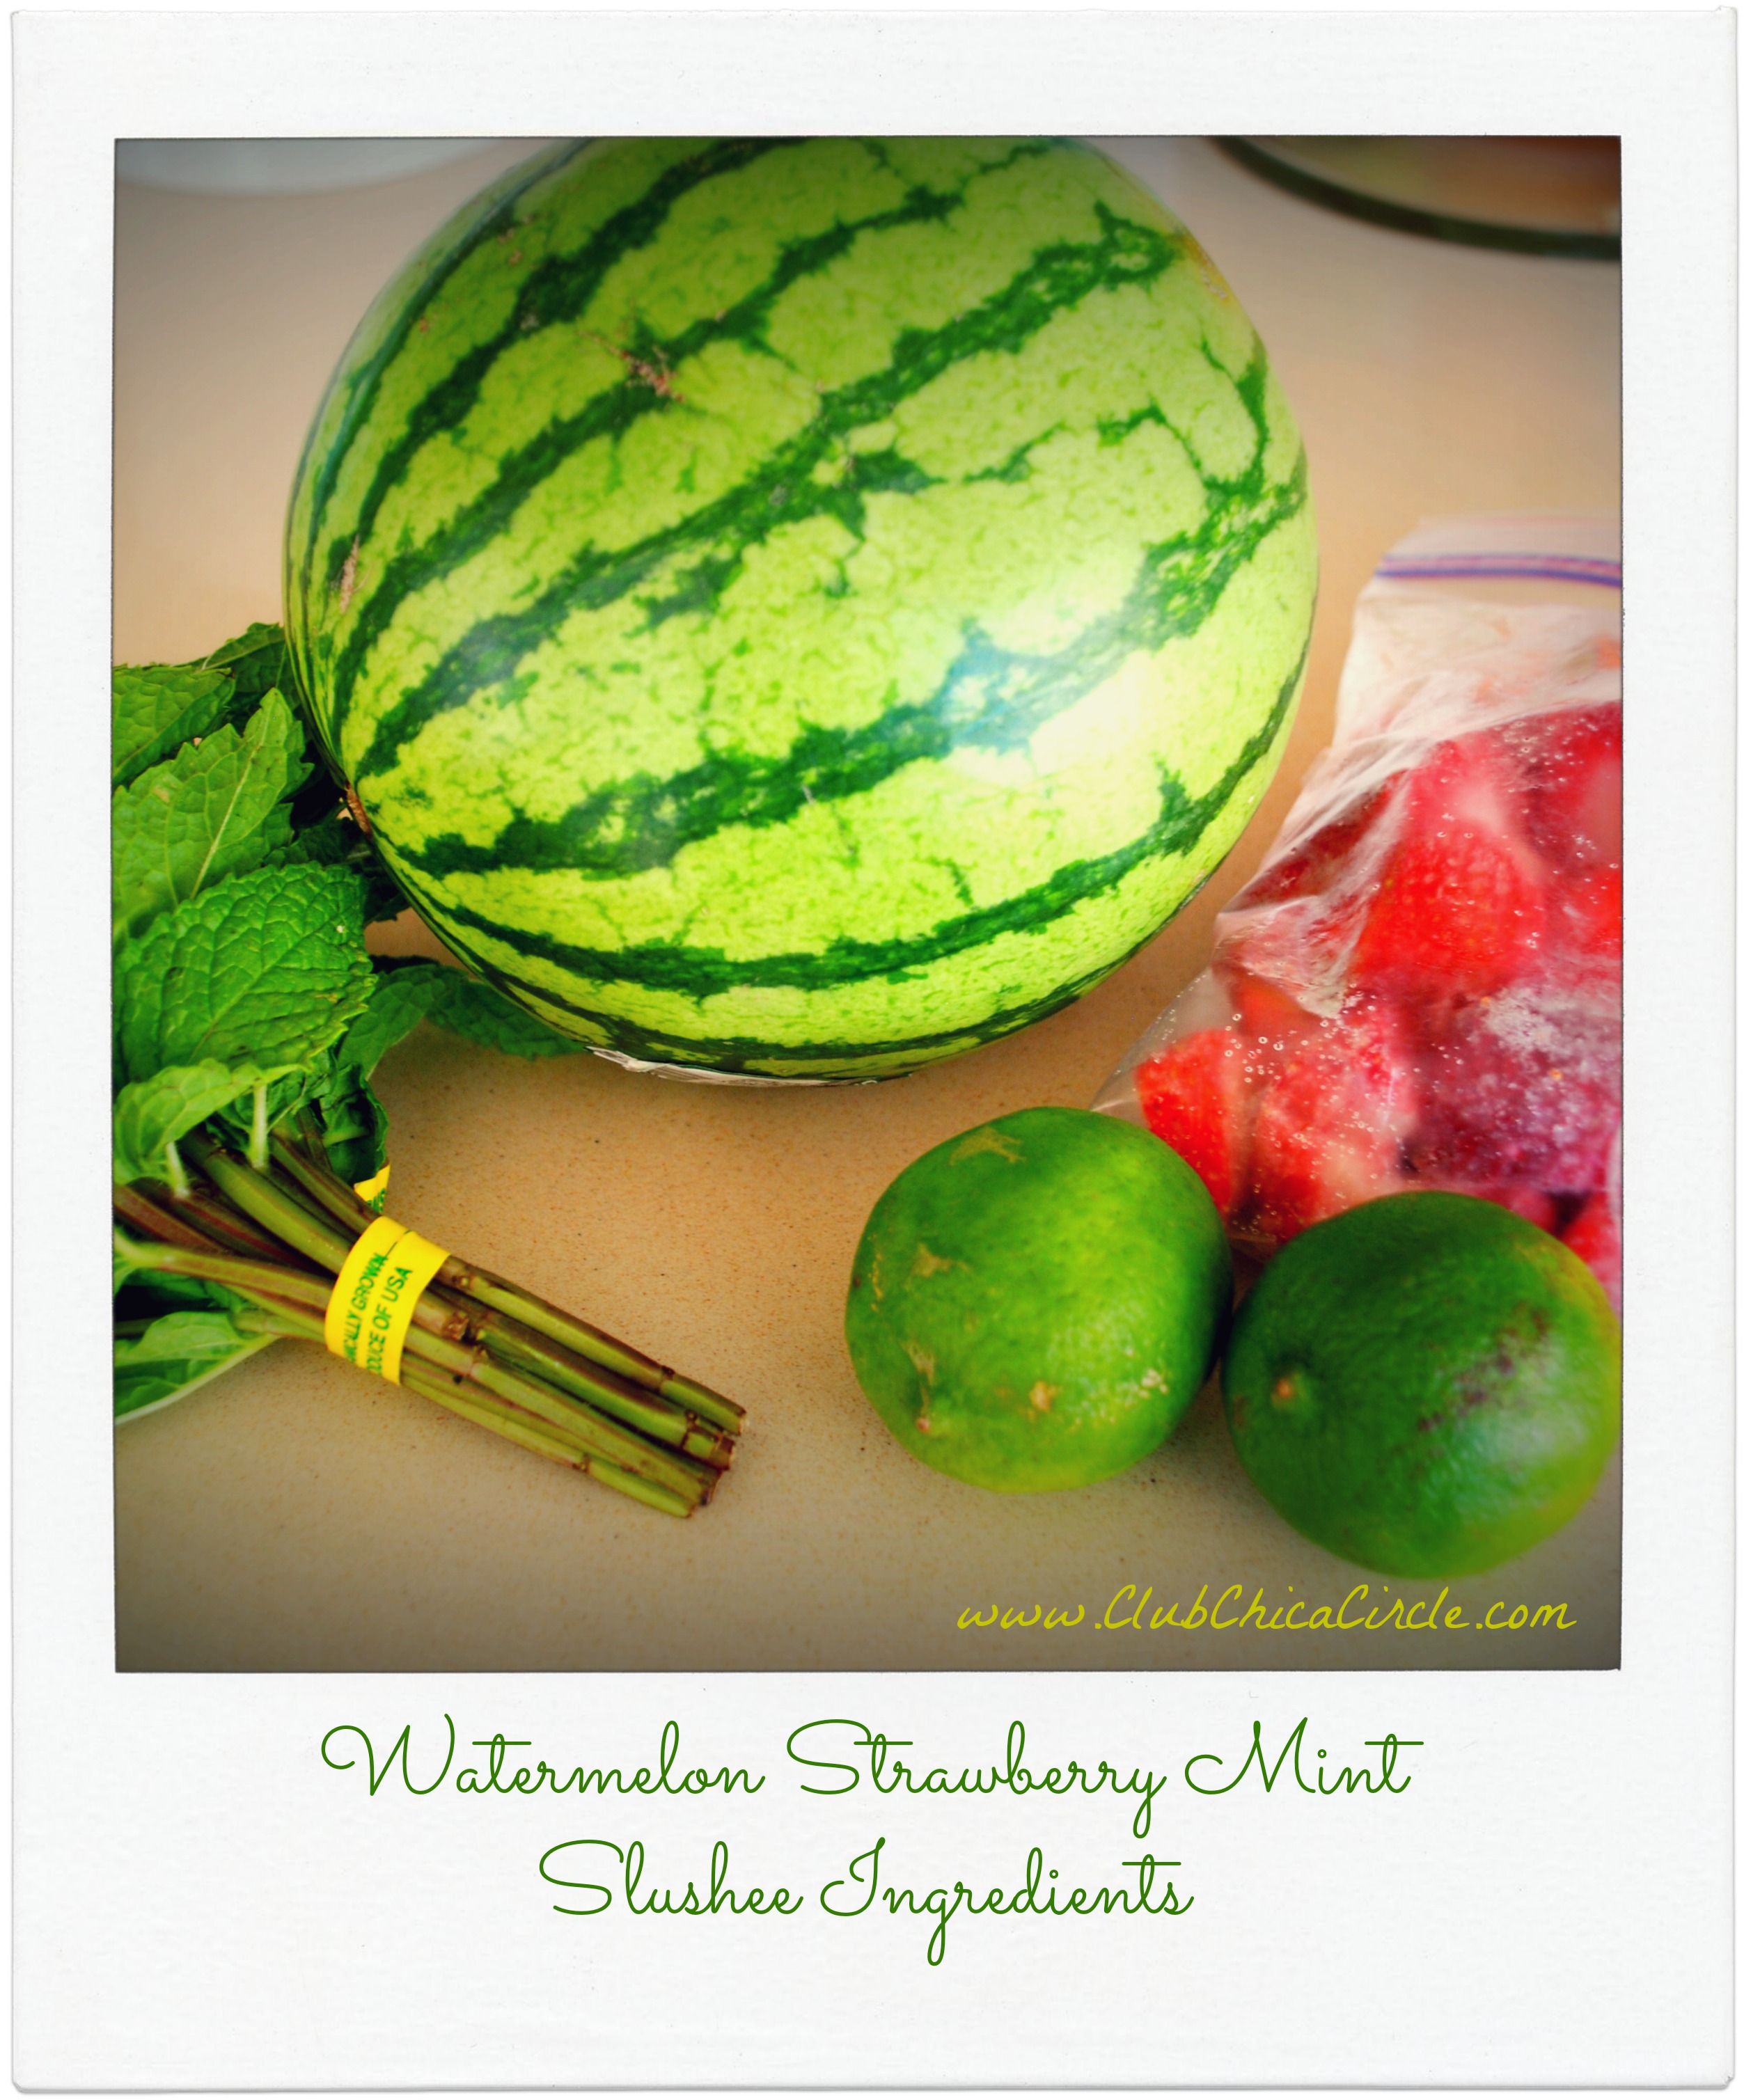 Watermelon Strawberry Mint Slushee Ingredients